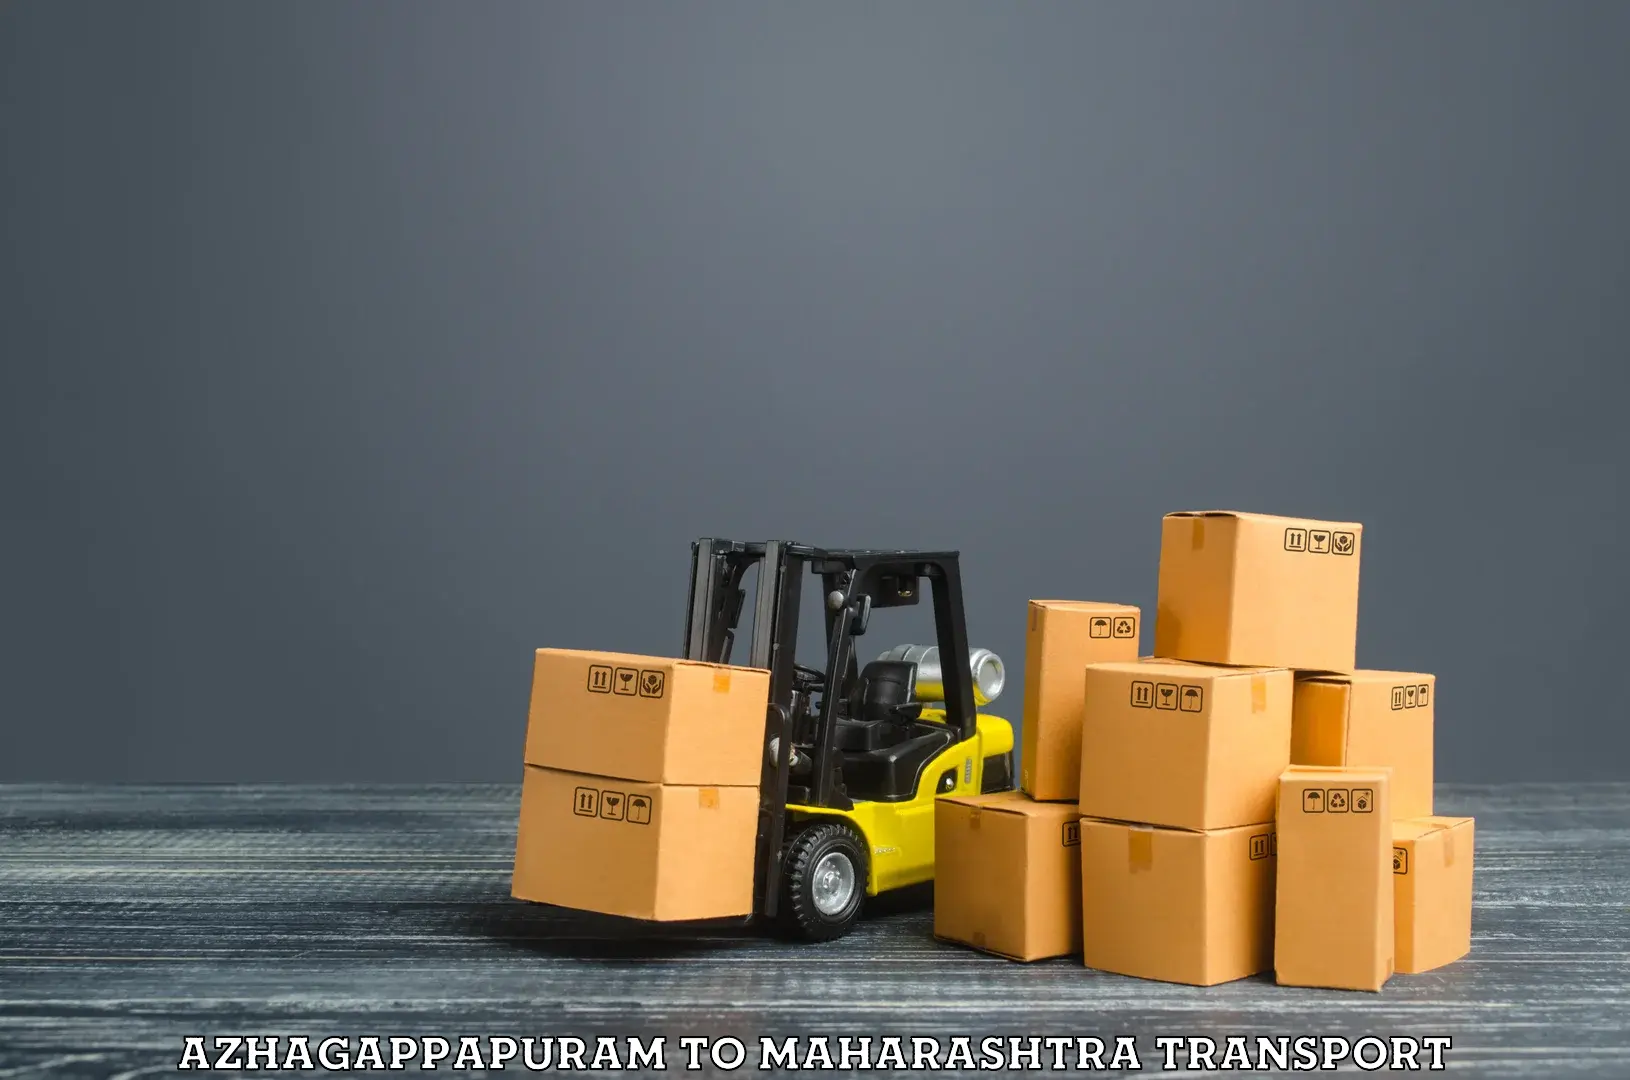 Cargo transportation services Azhagappapuram to Mumbai Port